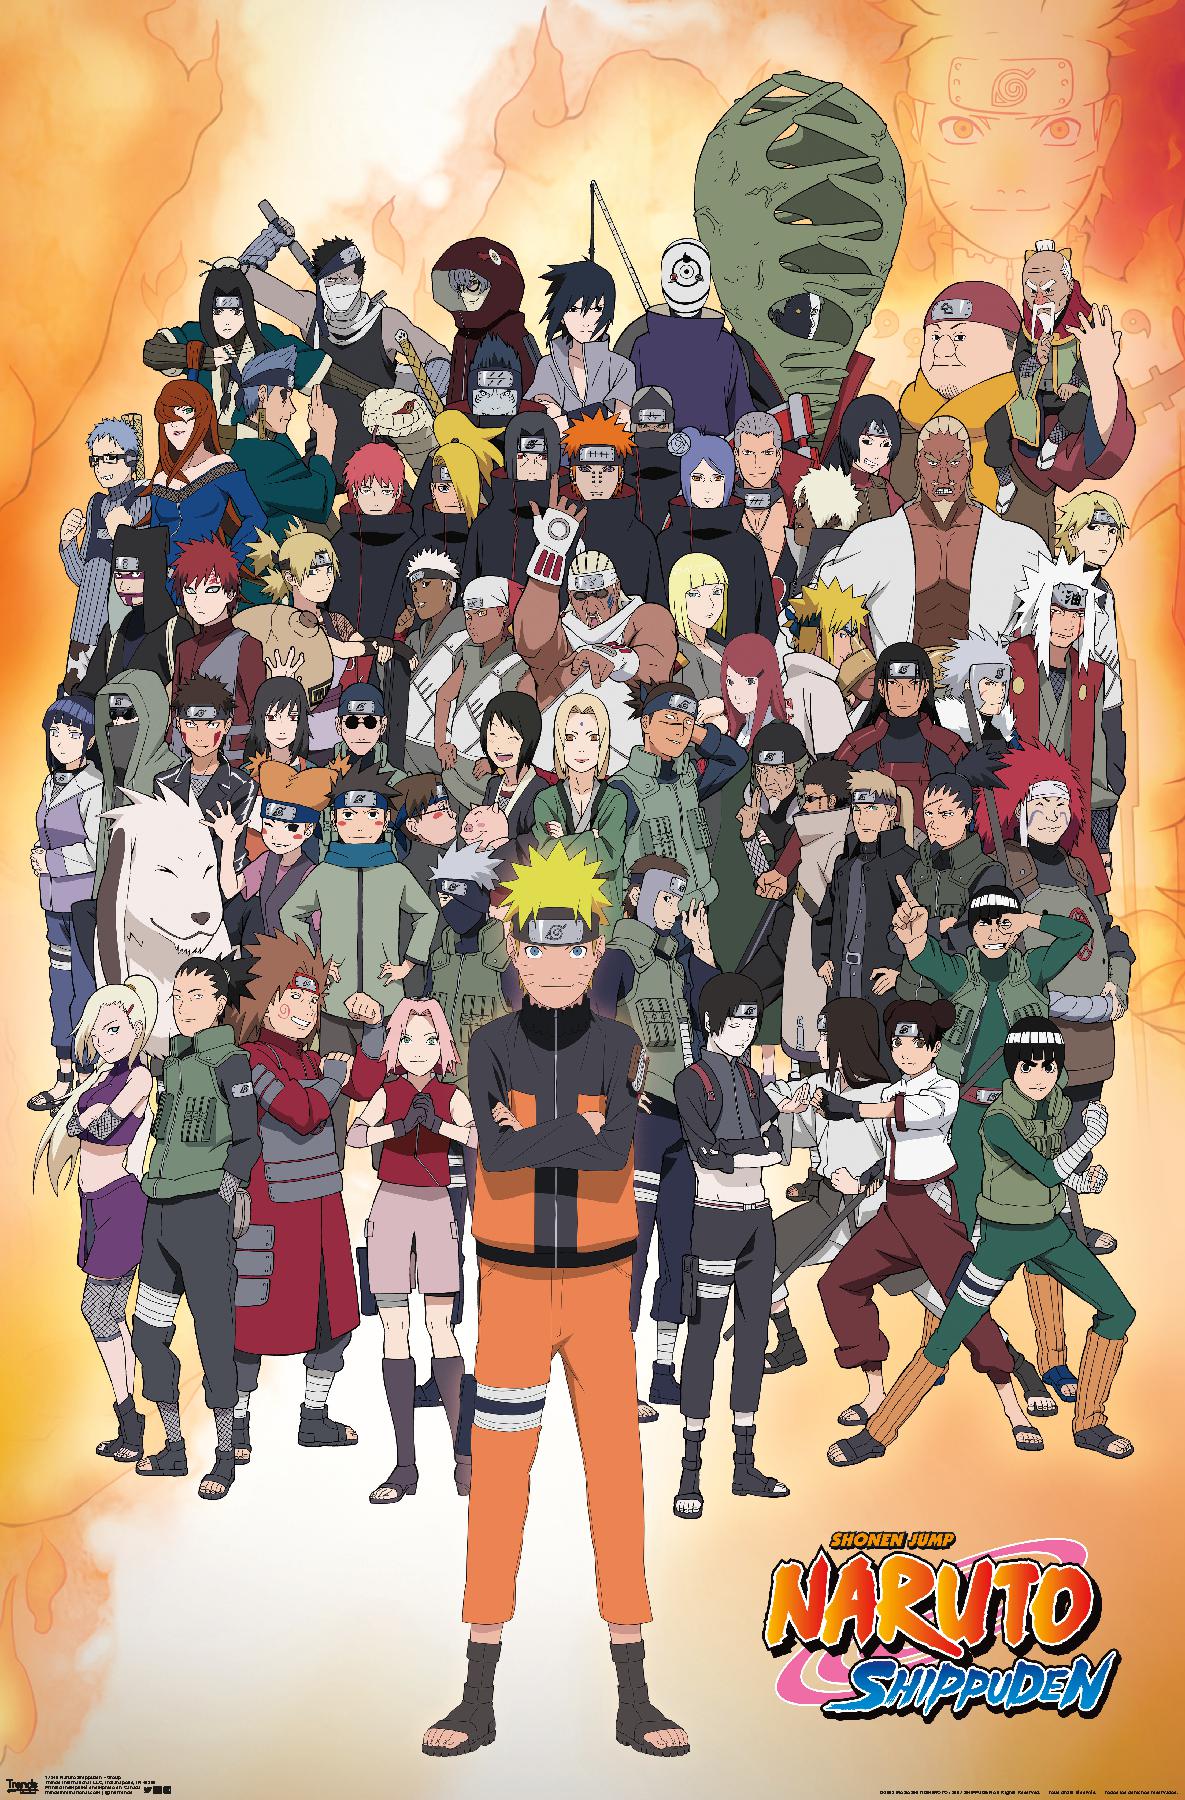 Naruto Shippuden - Group Wall Poster, 22.375" x 34" - image 1 of 4